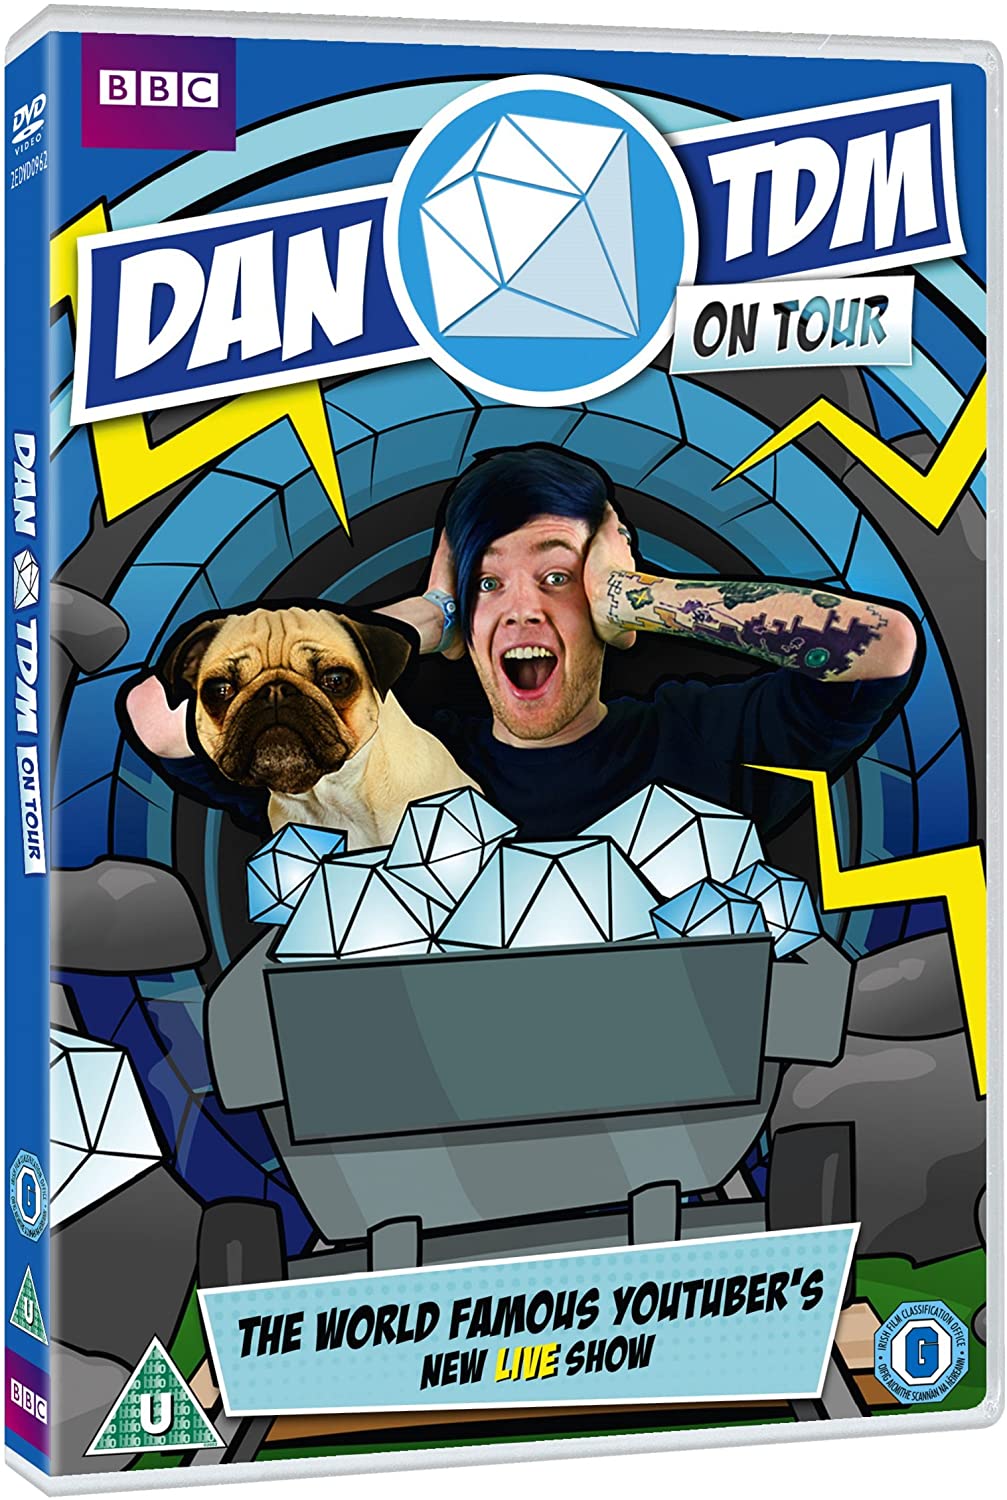 Dan TDM on Tour [DVD] [2017]